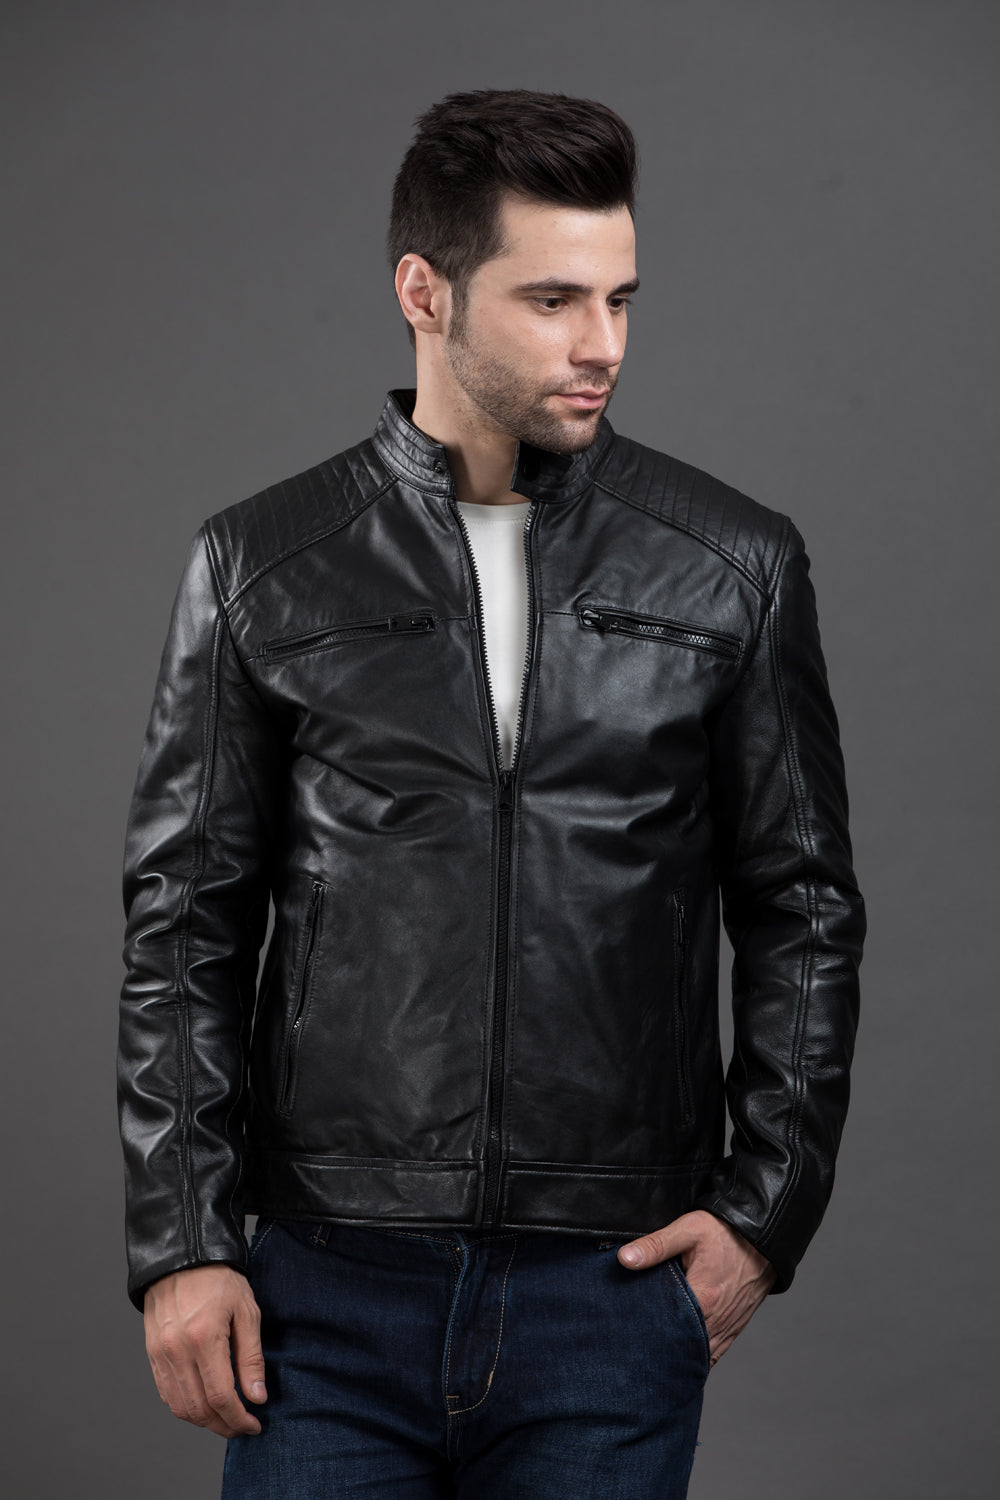 Andrew Tate Top G Black Leather Jacket - Alex Gear – AlexGear